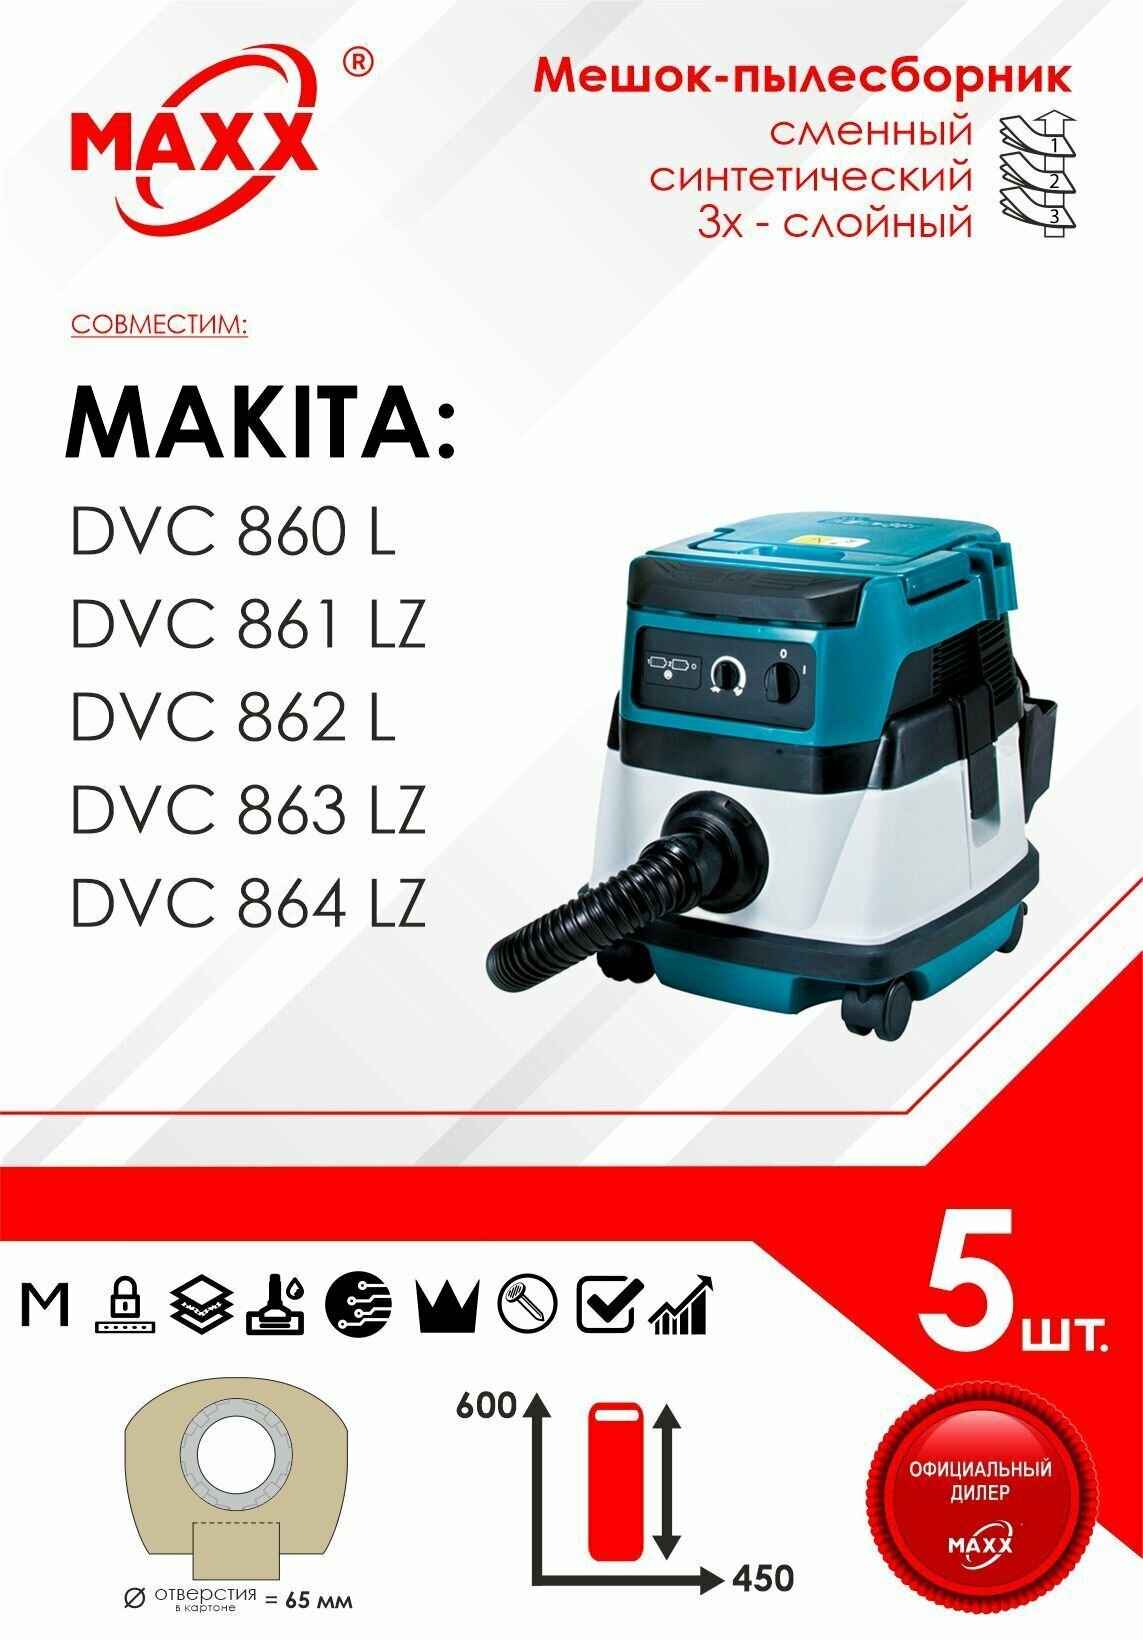 Мешок - пылесборник 5 шт. для пылесоса Makita DVC 860, Makita DVC 864 Макита